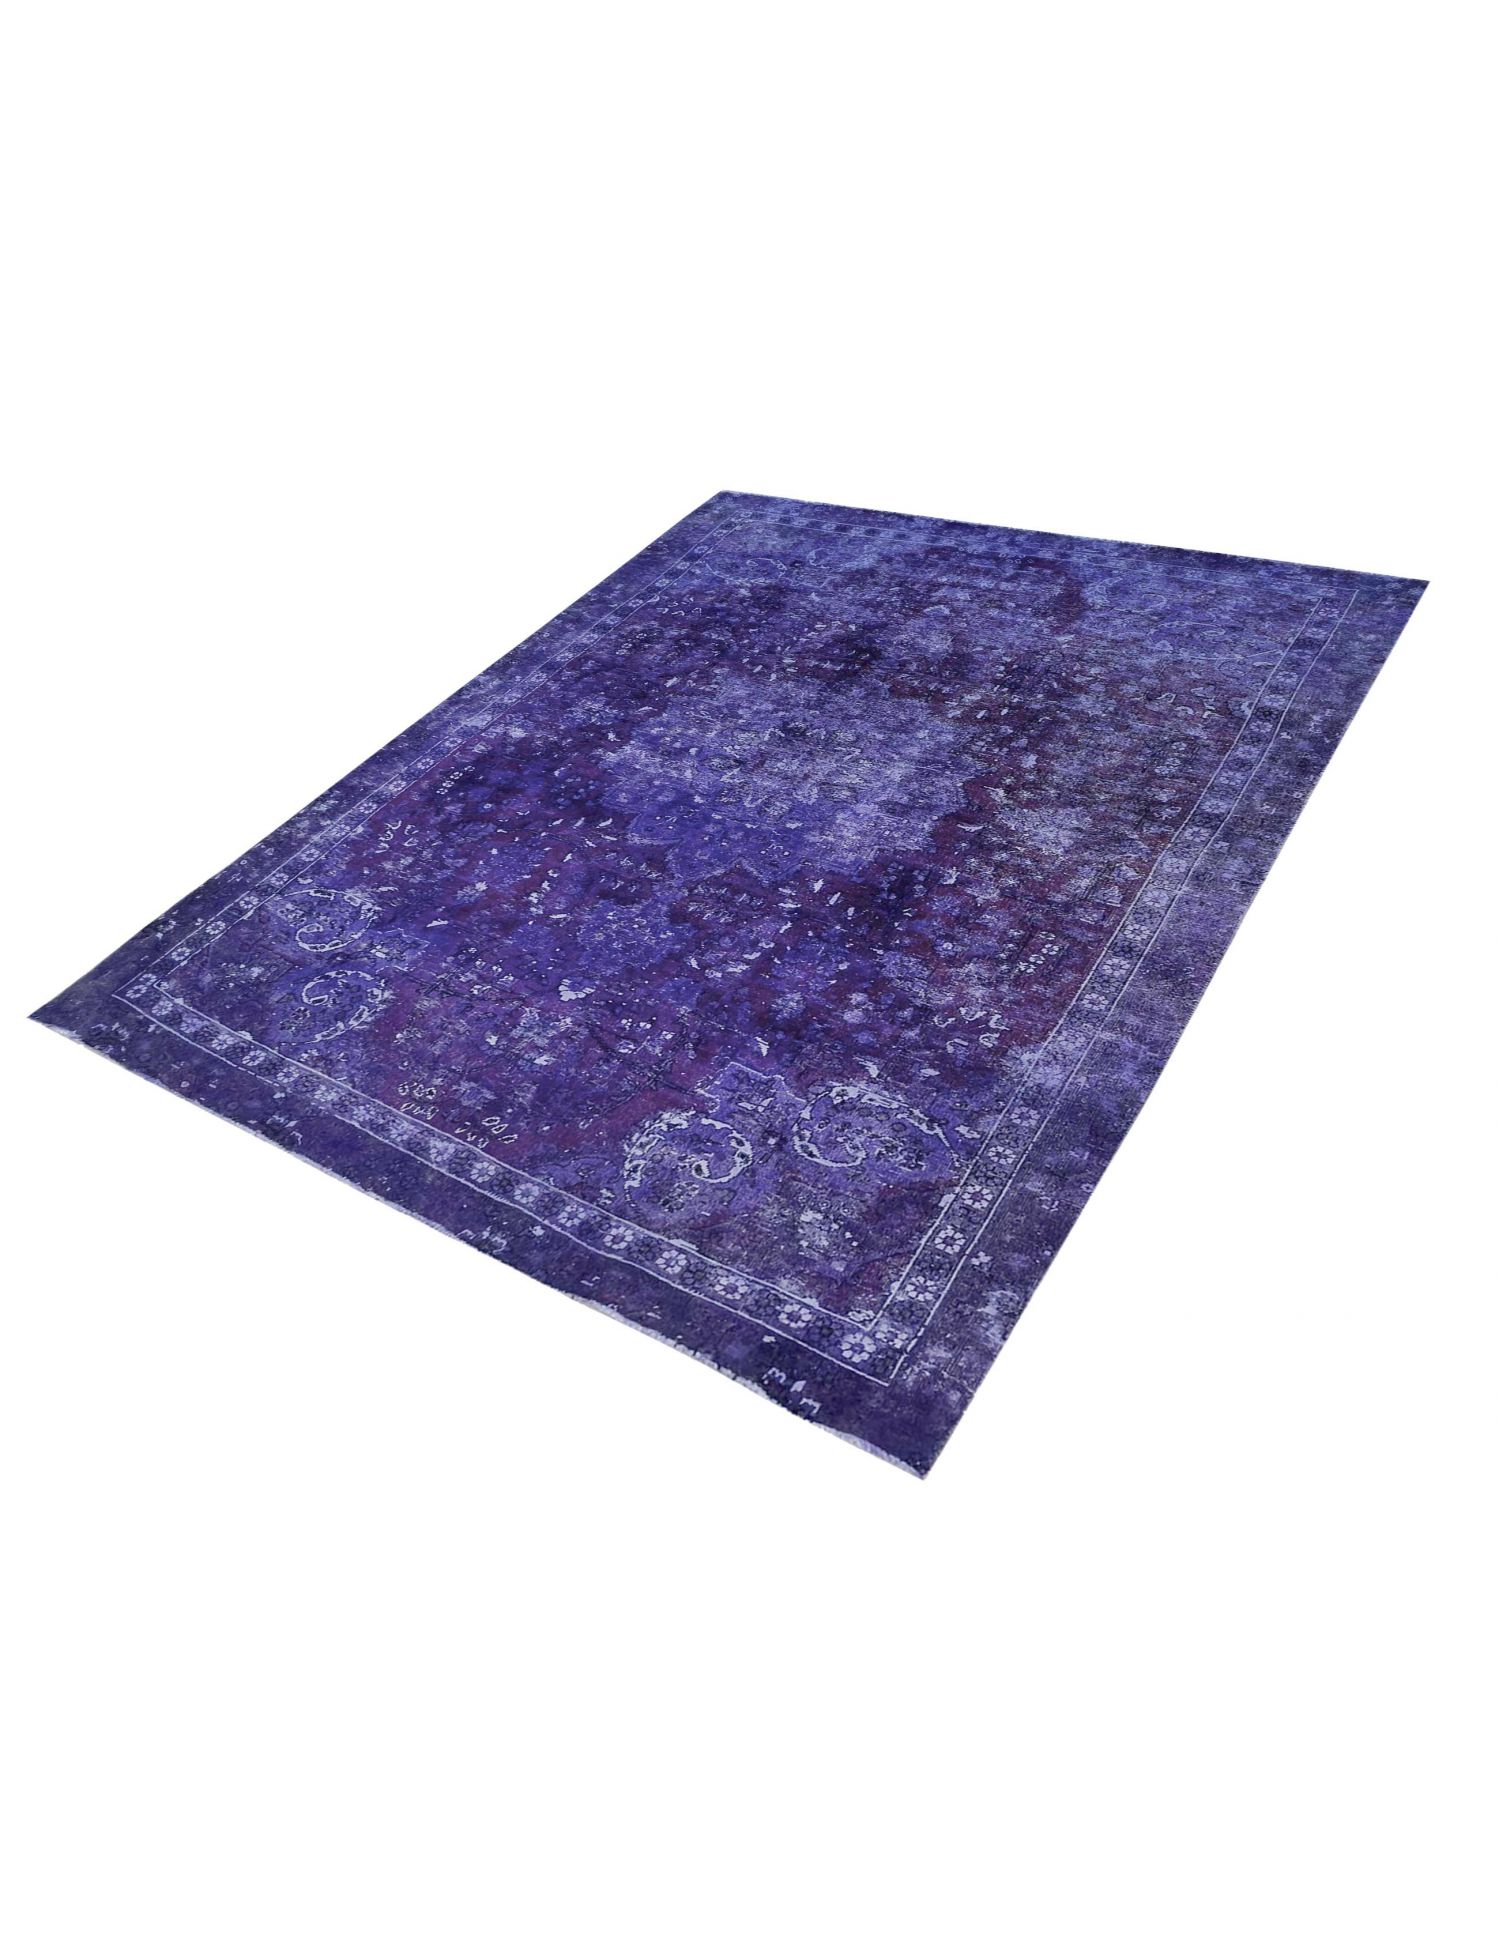 Persian Vintage Carpet  viola <br/>328 x 216 cm